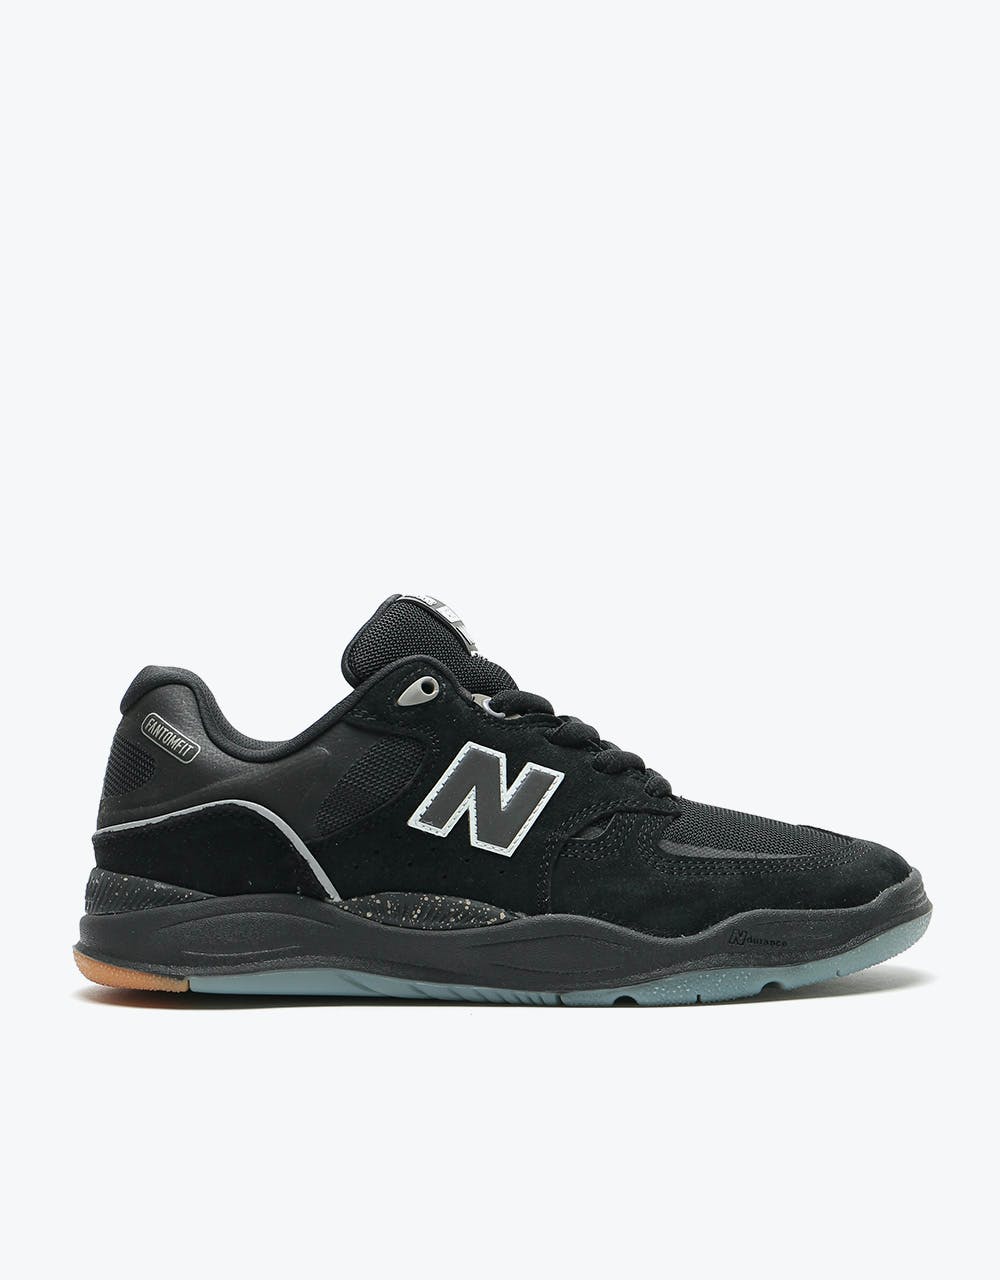 New Balance Numeric 1010 Skate Shoes - Black/Black